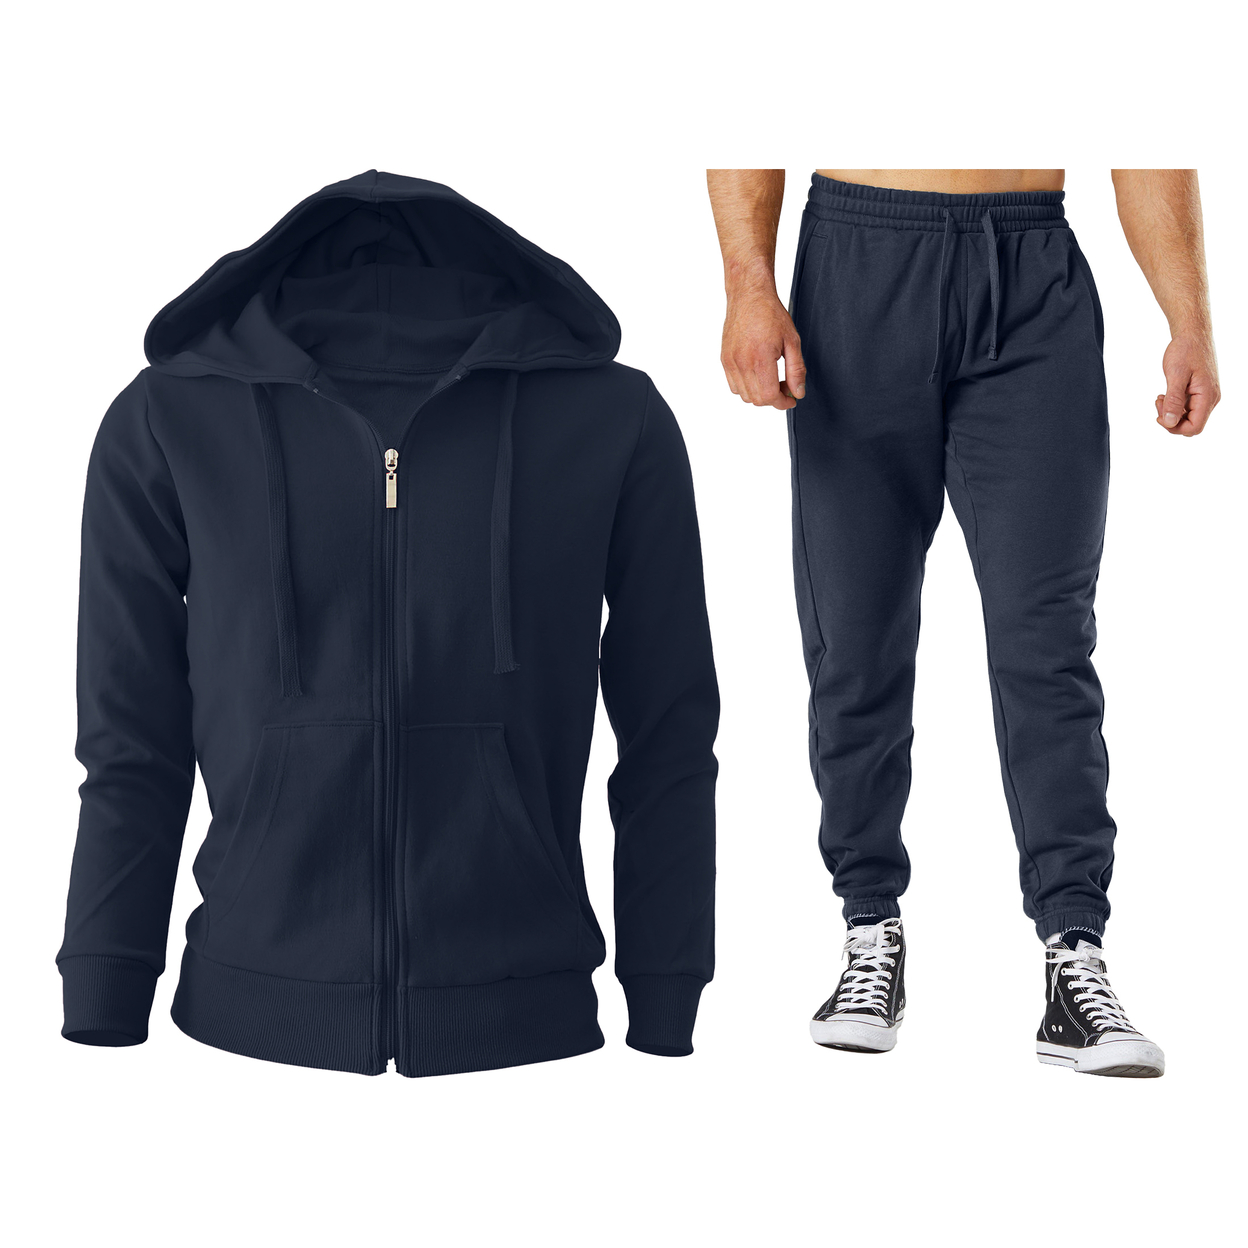 2-Piece: Men's Winter Warm Cozy Athletic Multi-Pockets BIG & TALL Sweatsuit Set - Black, Large